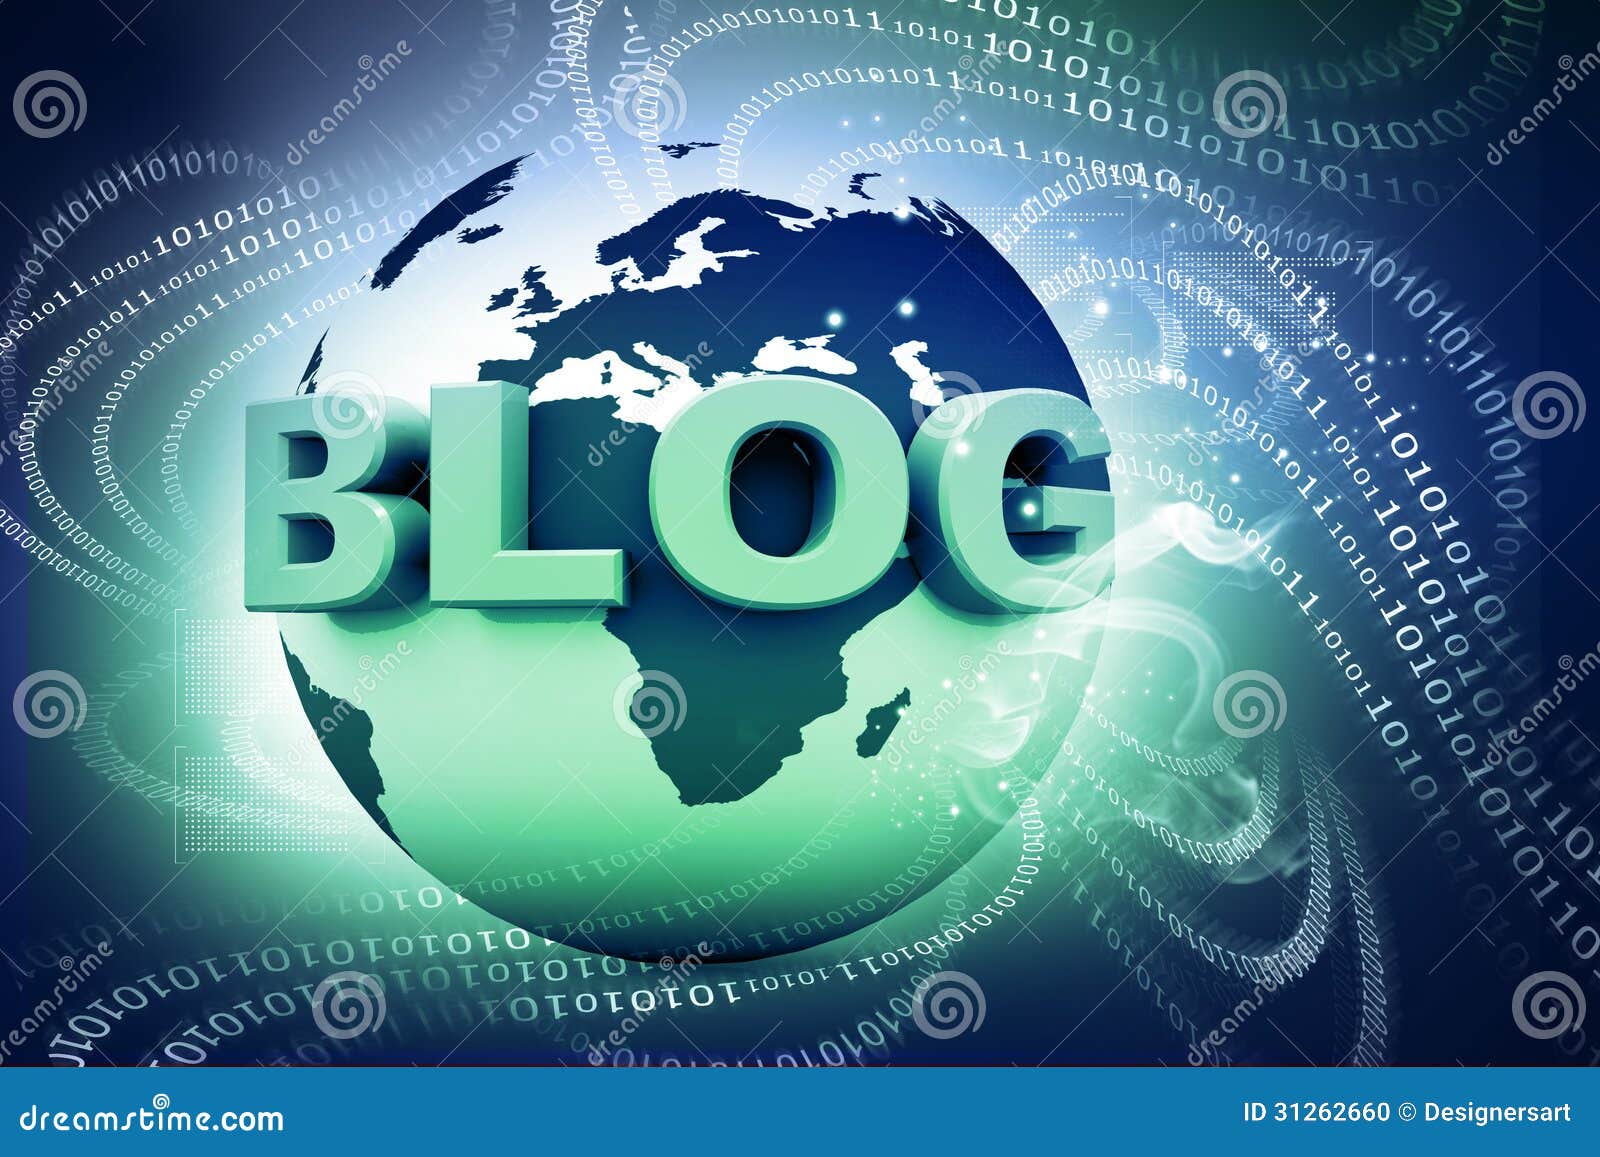 blog and world